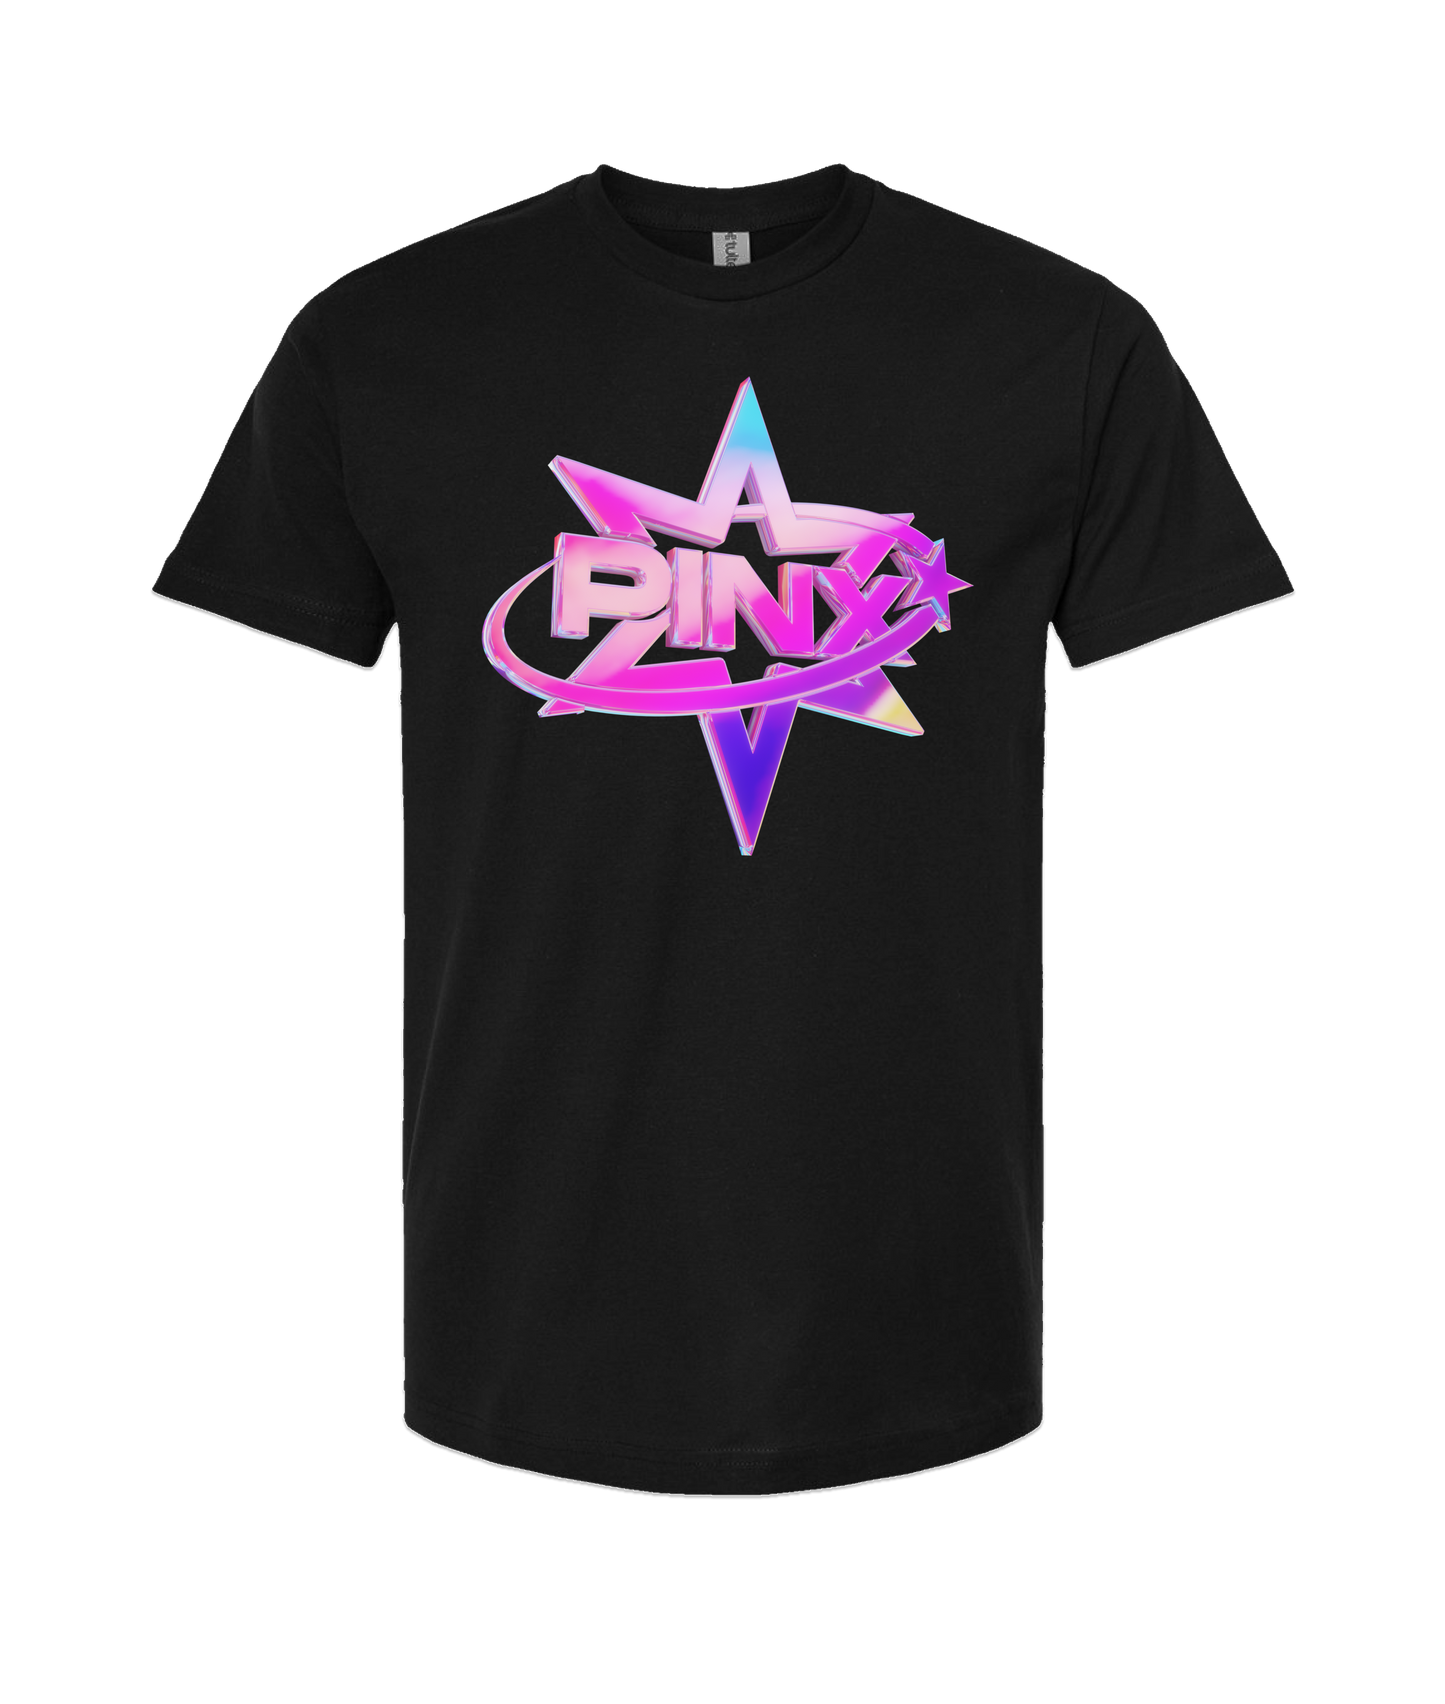 Pinx - 3D Star - Black T Shirt